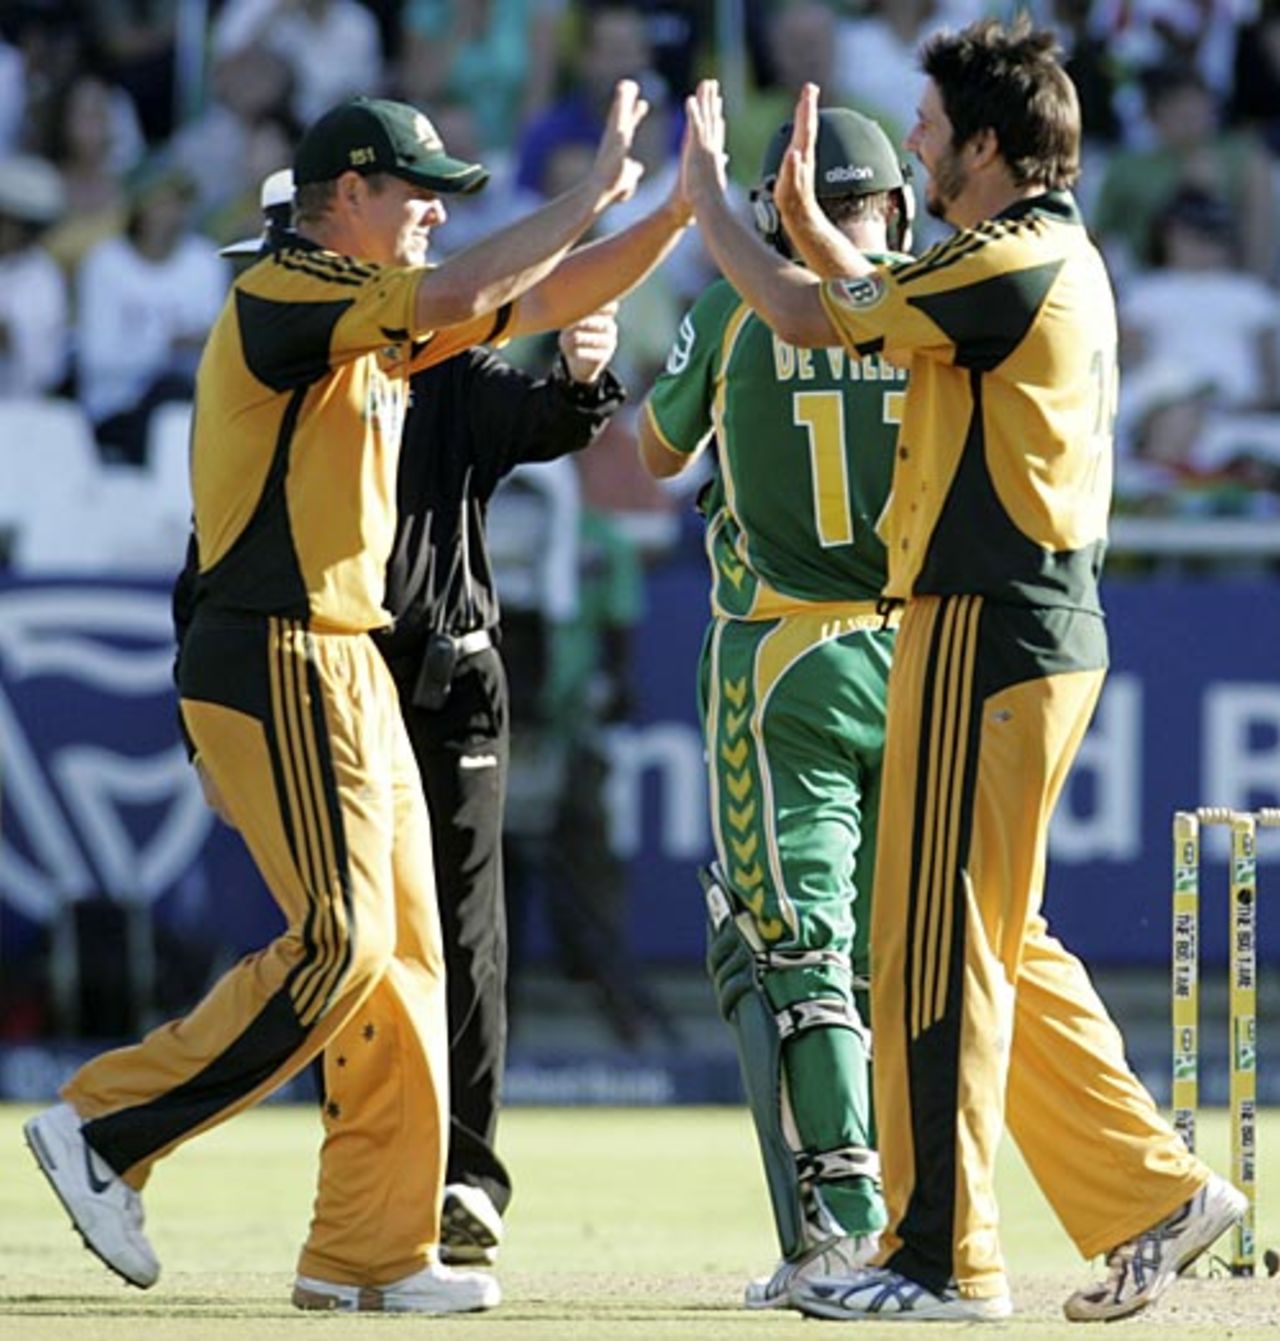 Brett Geeves celebrates Jacques Kallis' wicket, South Africa v Australia, 3rd ODI, Newlands, Cape Town, April 9, 2009